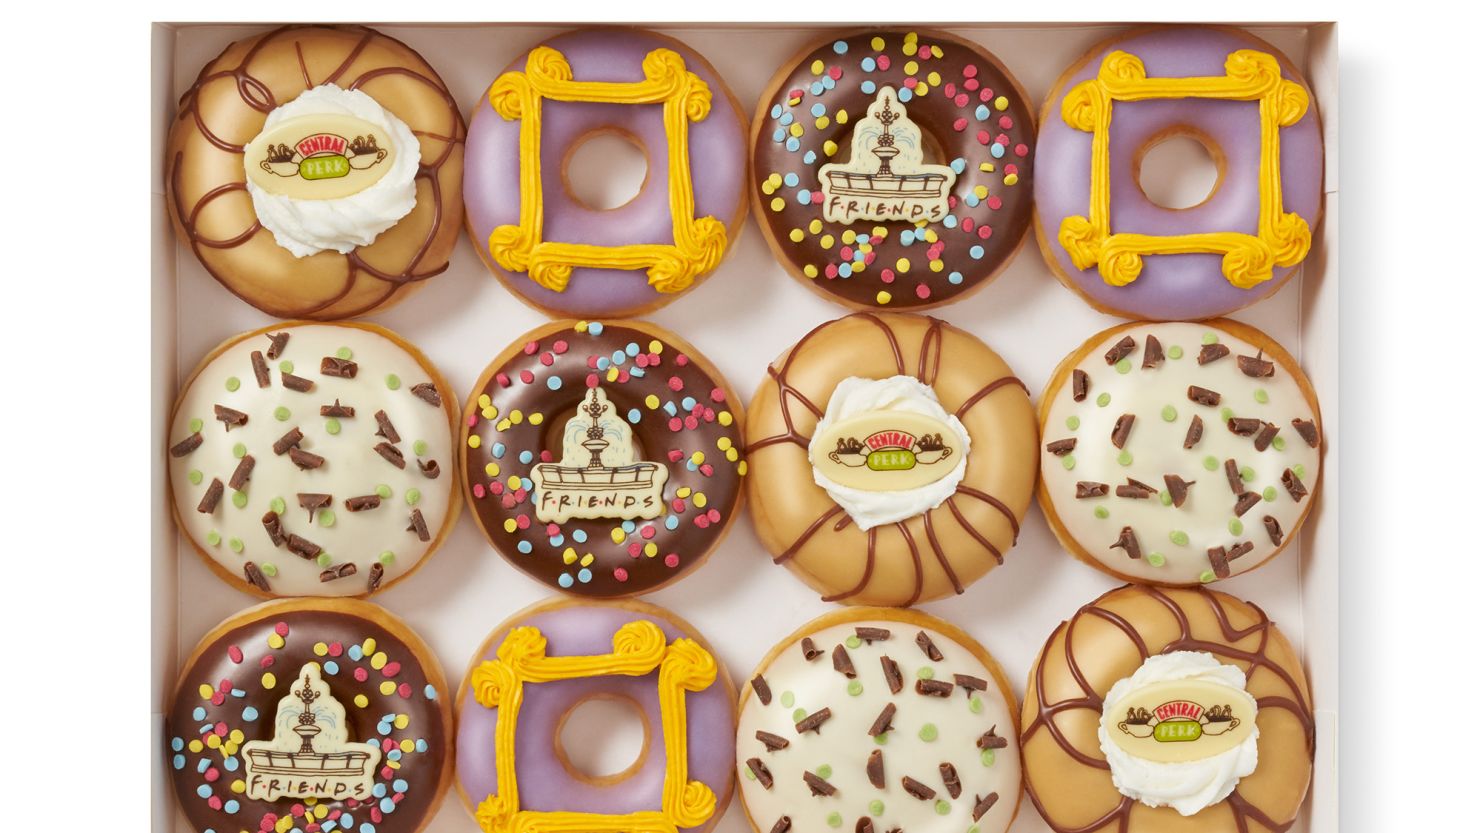 Krispy Kreme releases ‘Friends’-themed doughnuts as UK exclusives.